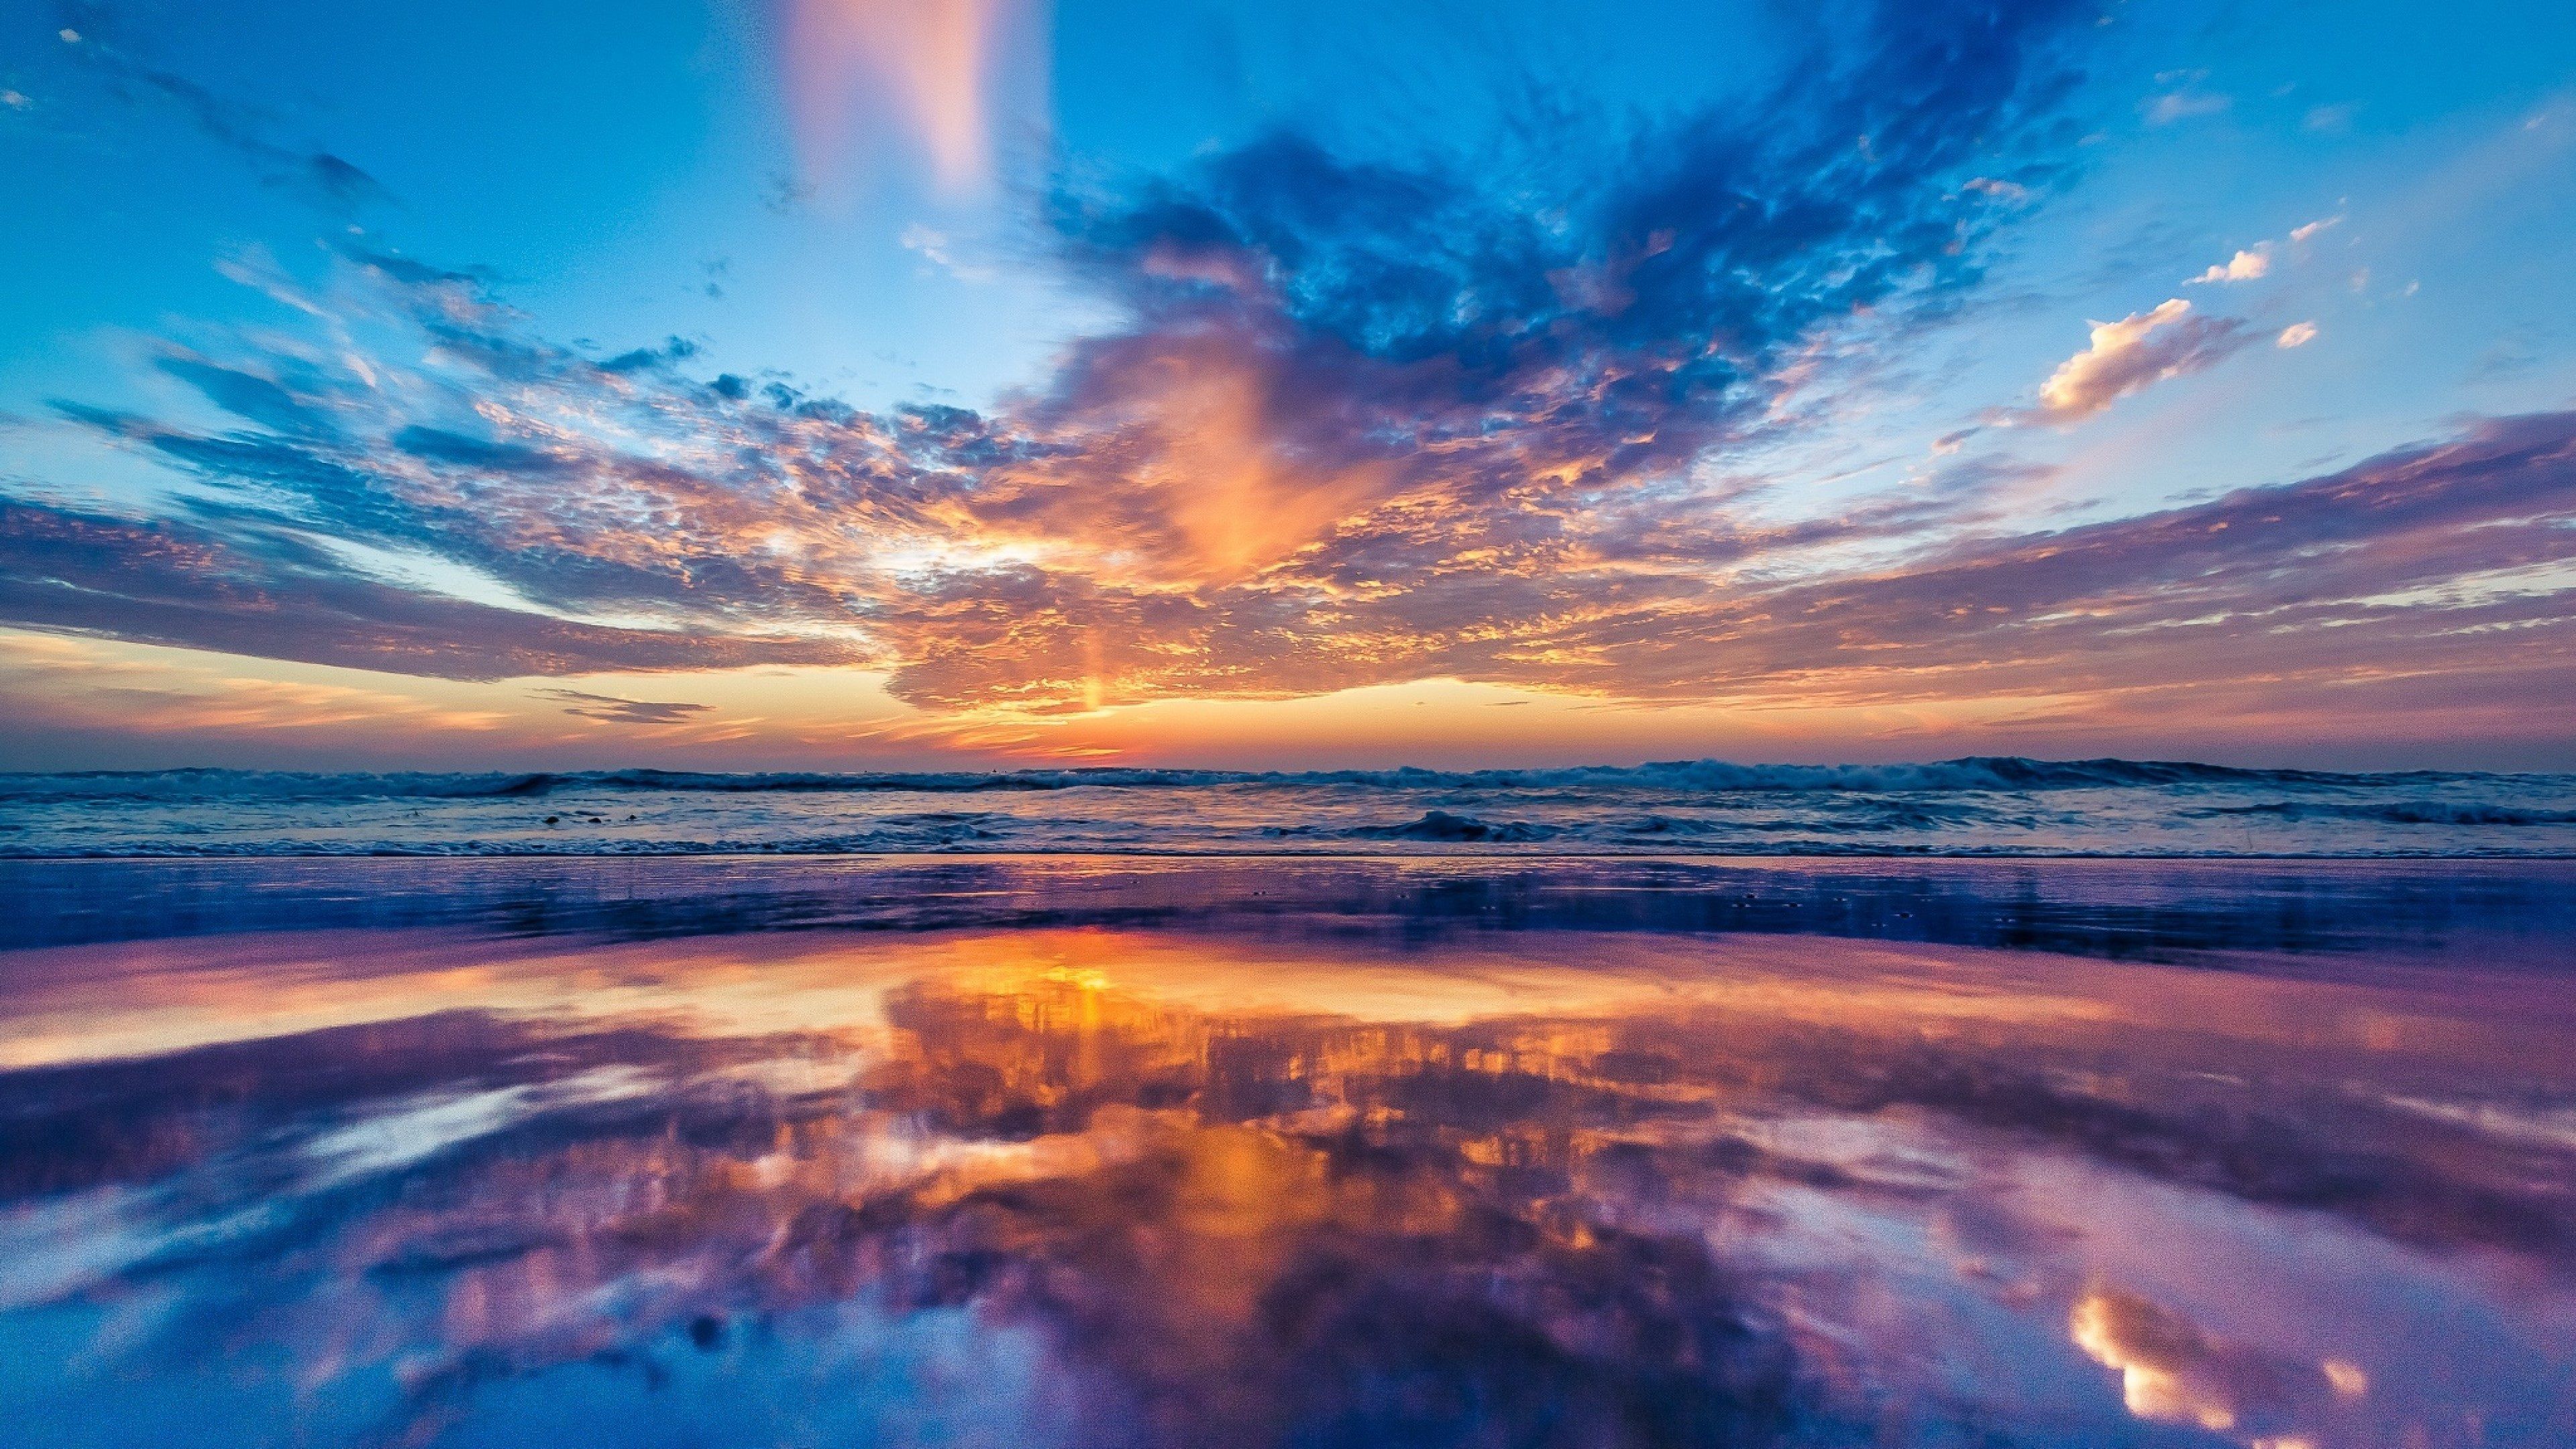 ocean 4k download HD wallpaper for desktop. Sunrise wallpaper, Beach sunset wallpaper, Beautiful nature wallpaper hd